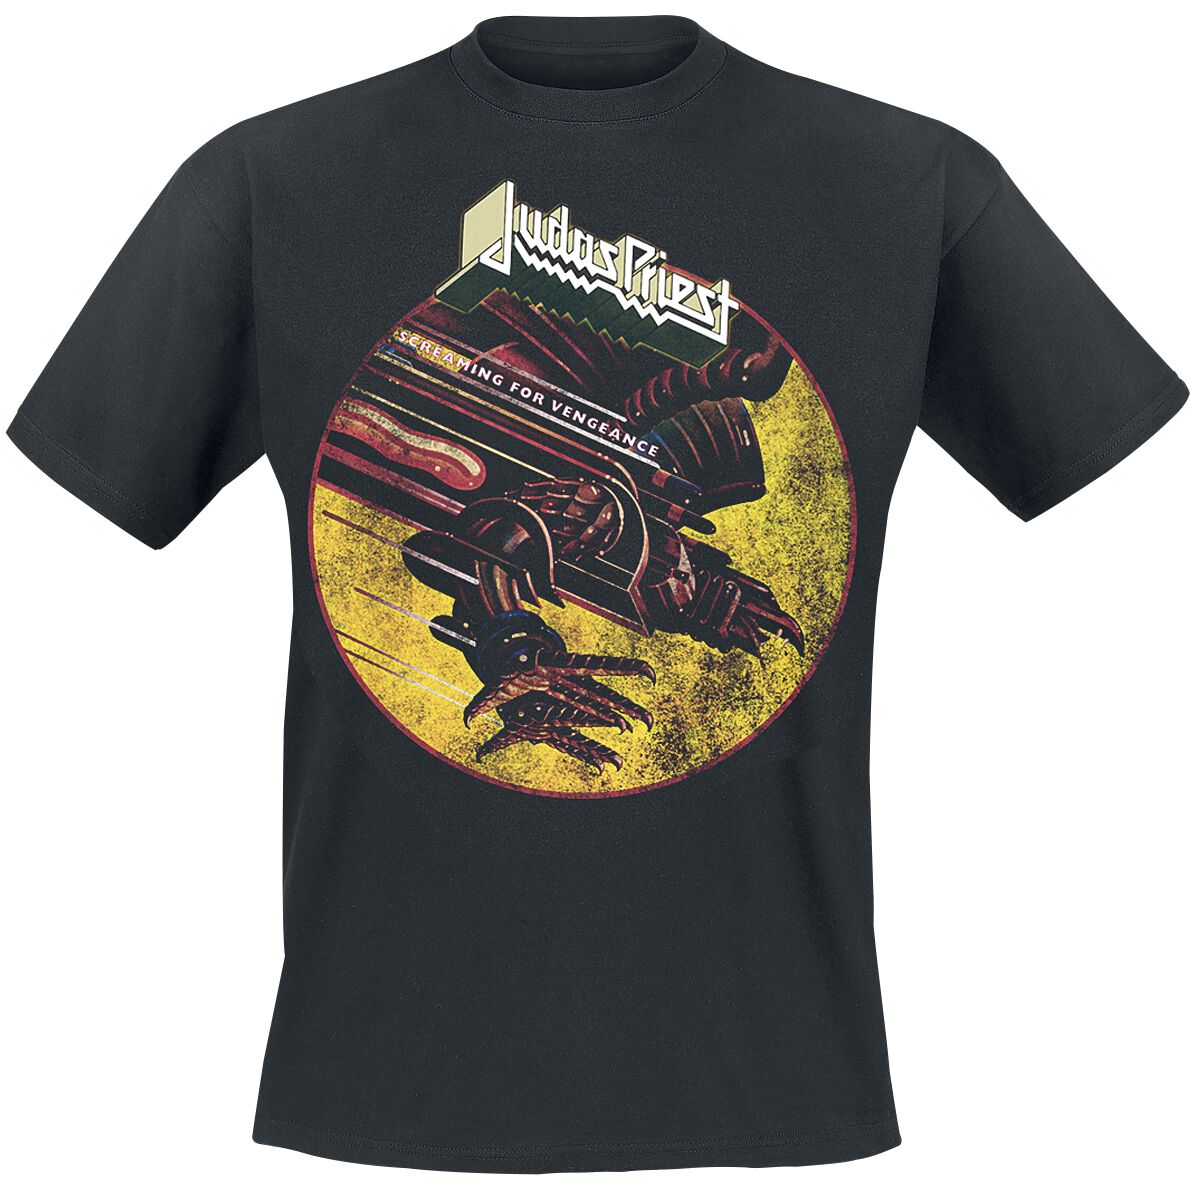 Judas Priest SFV Distressed T-Shirt schwarz in XXL